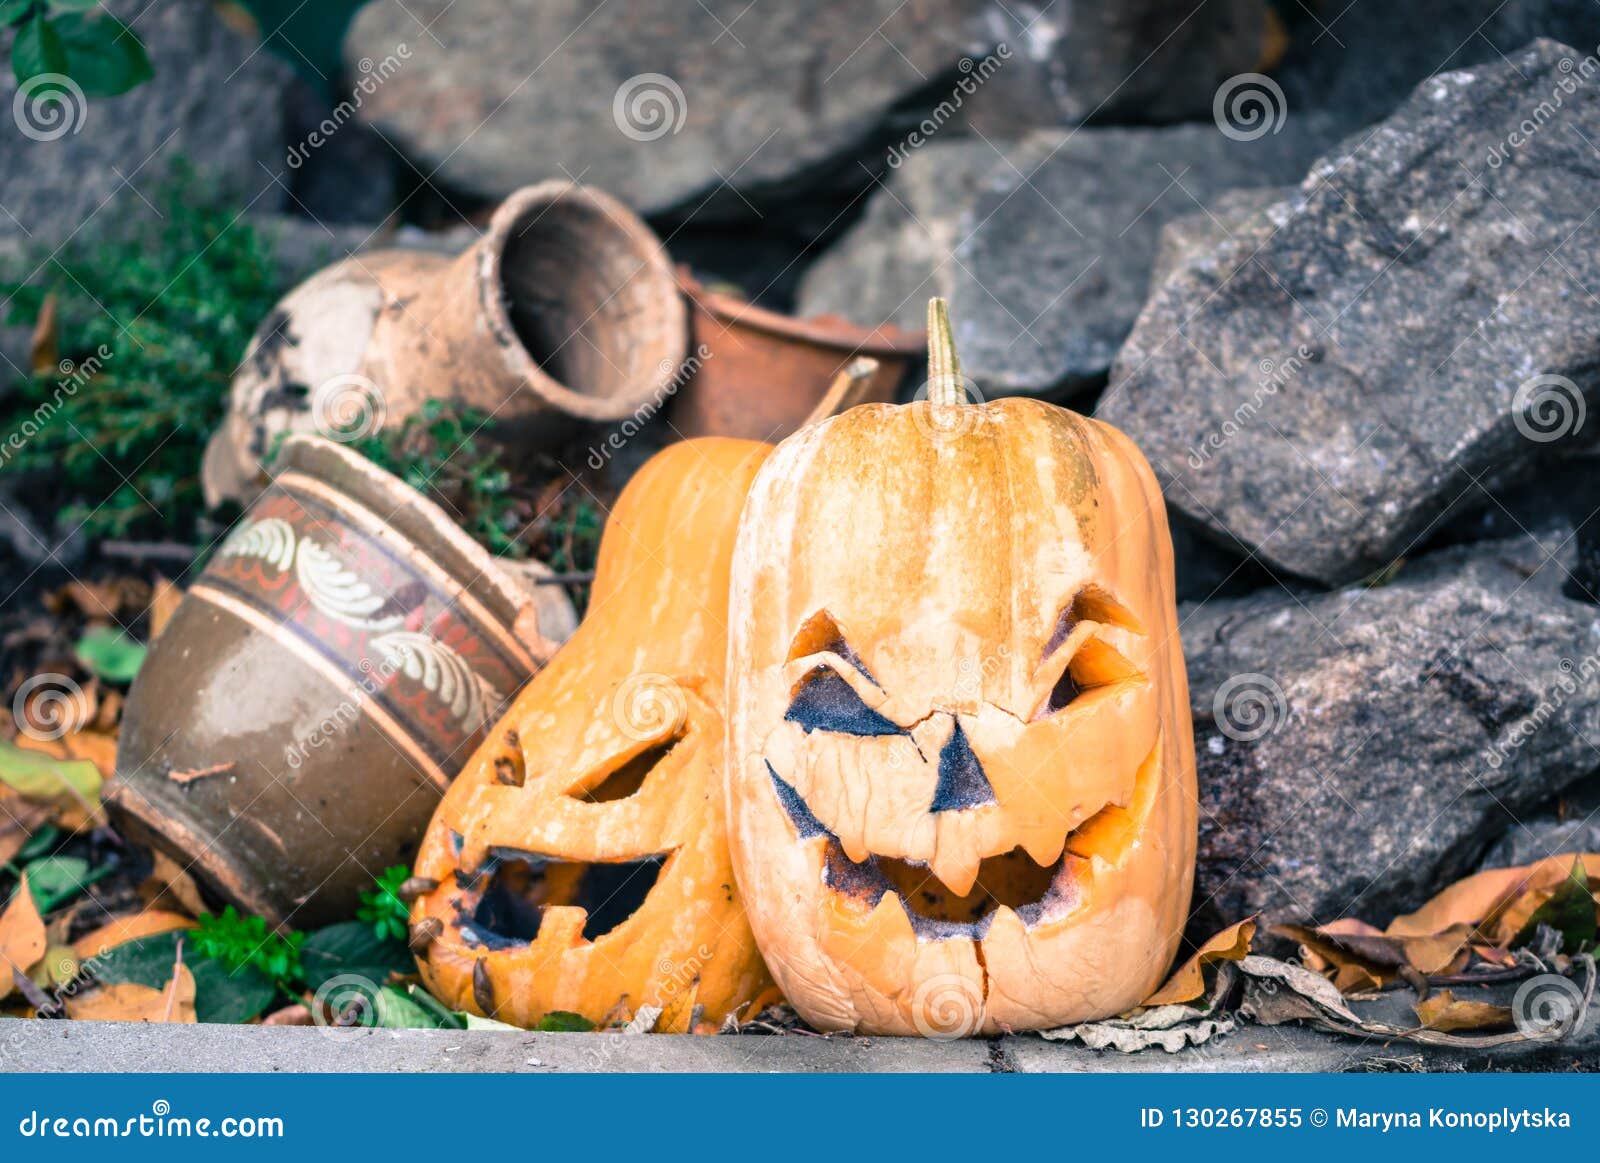 Old Rotting Yellow Pumpkin Traditional Halloween